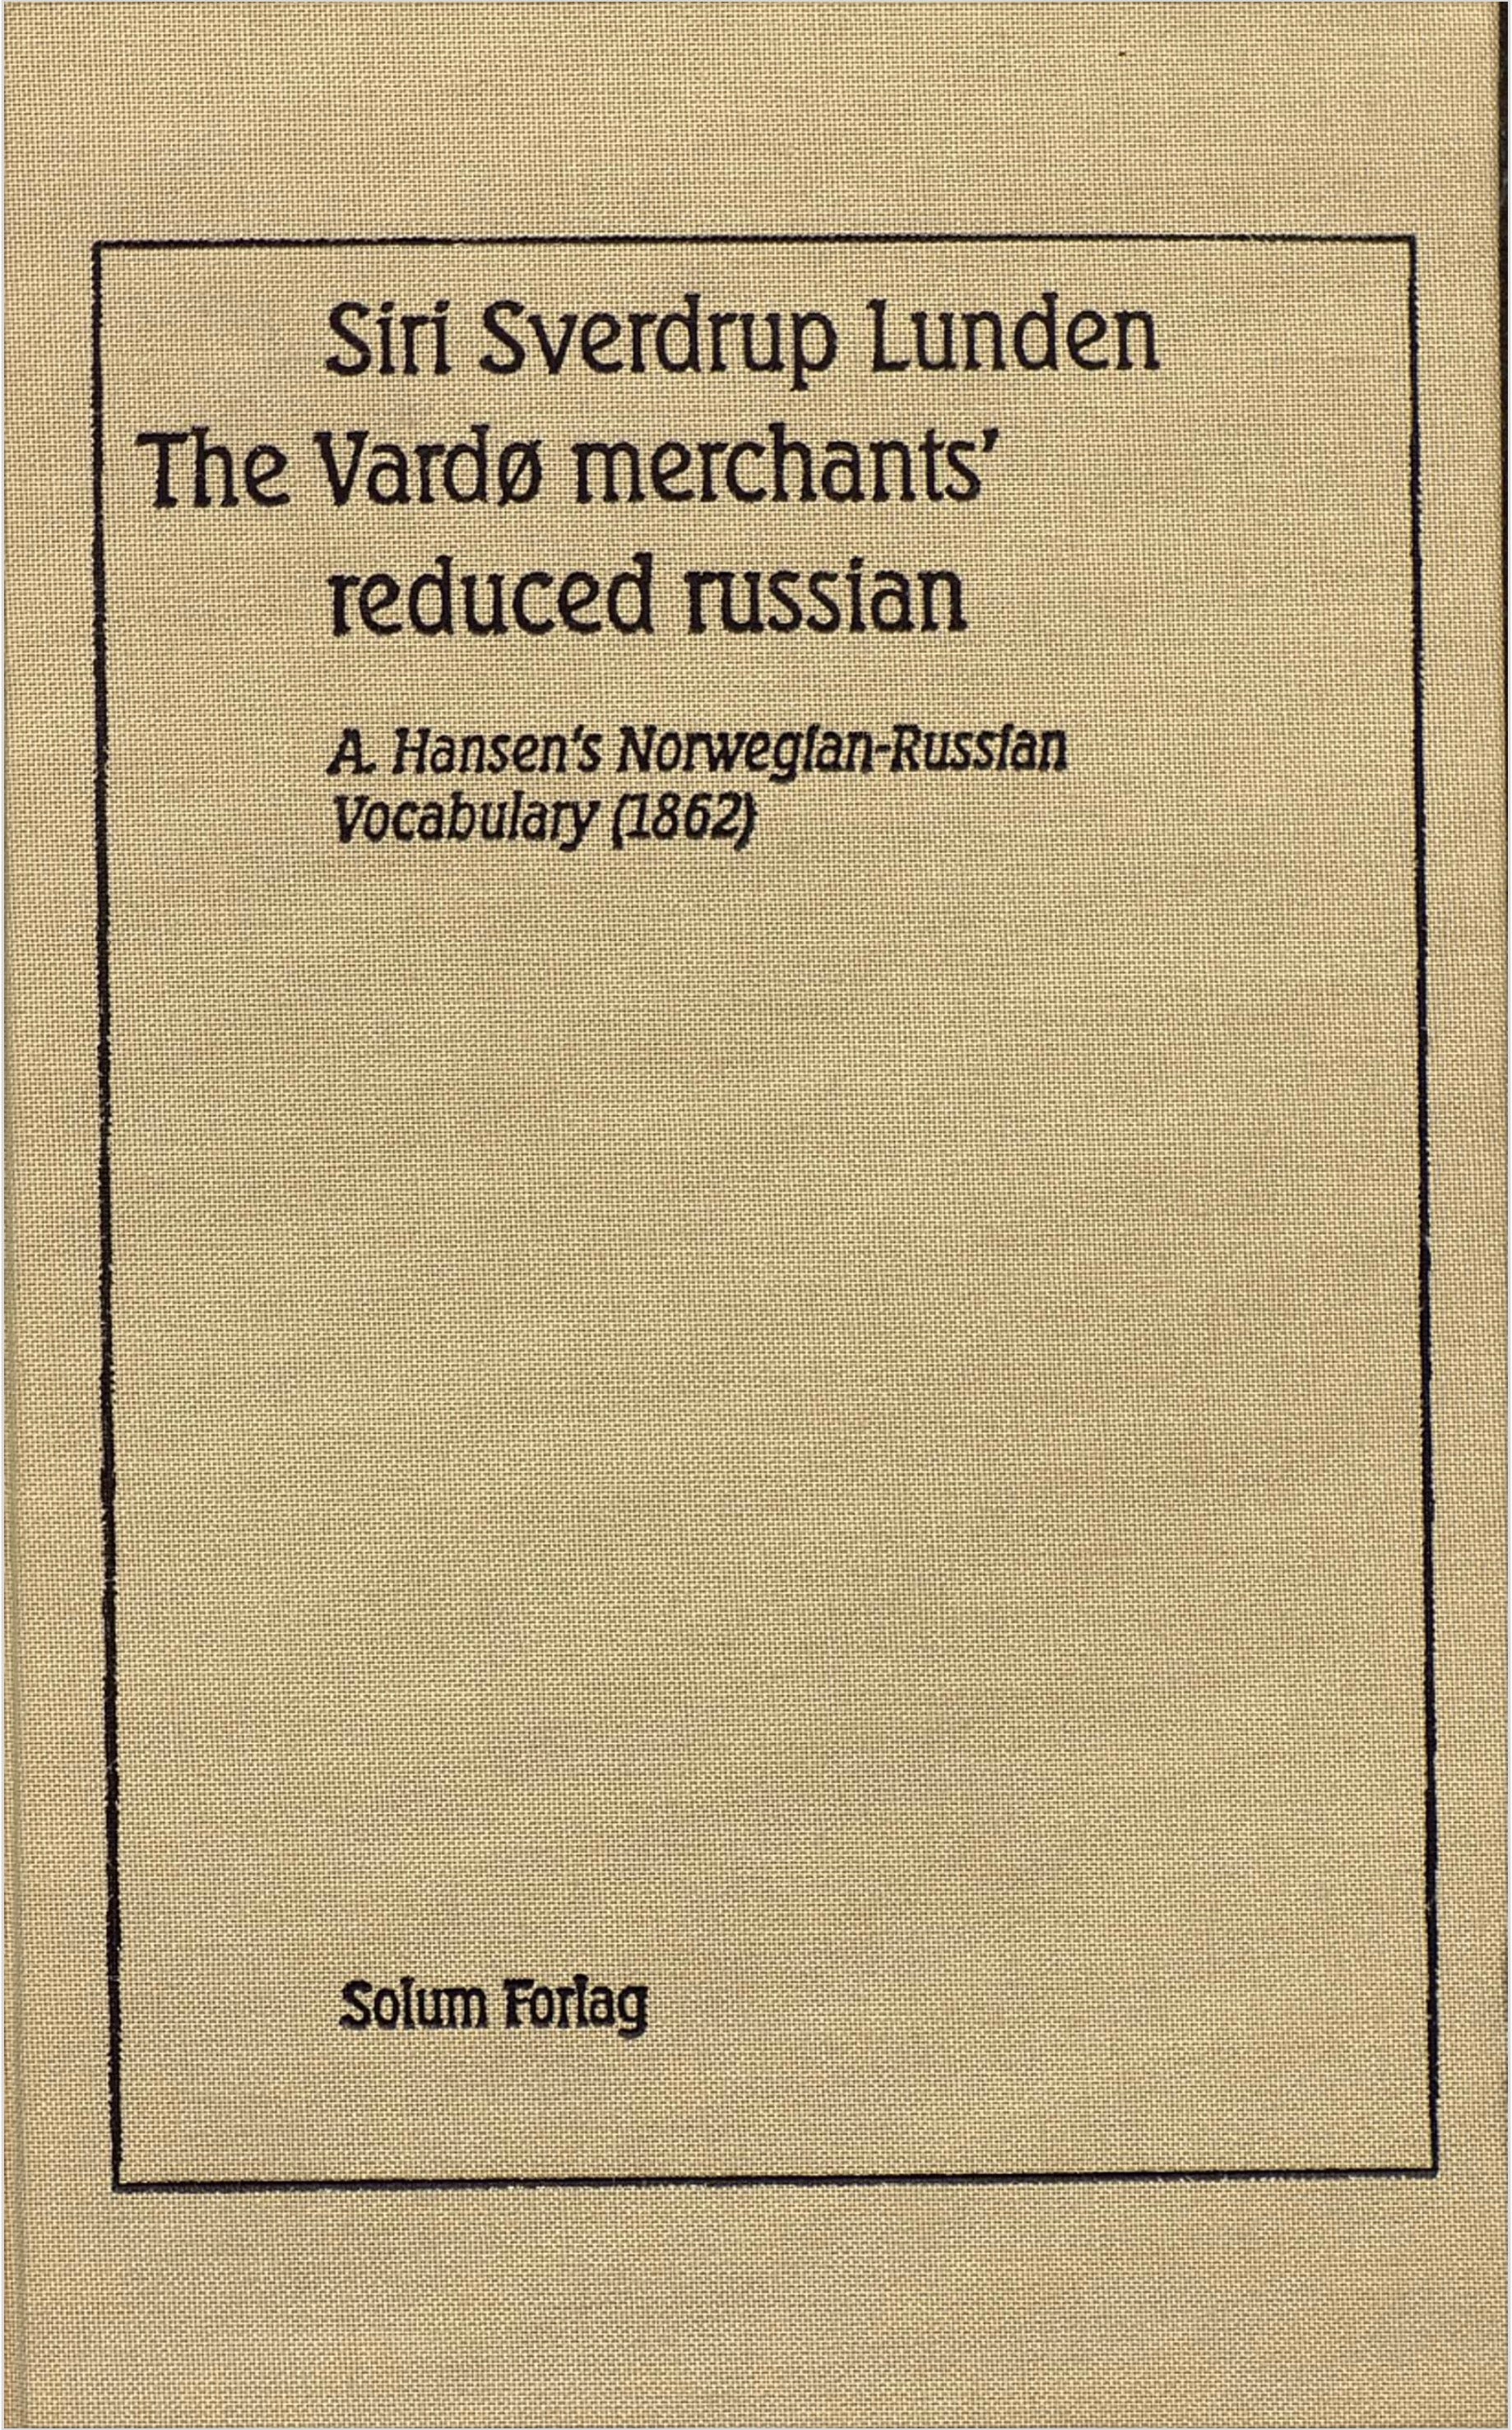 The Vardø merchants' reduced russian: A. Hansens's Norwegian-Russian vocabulary, 1862